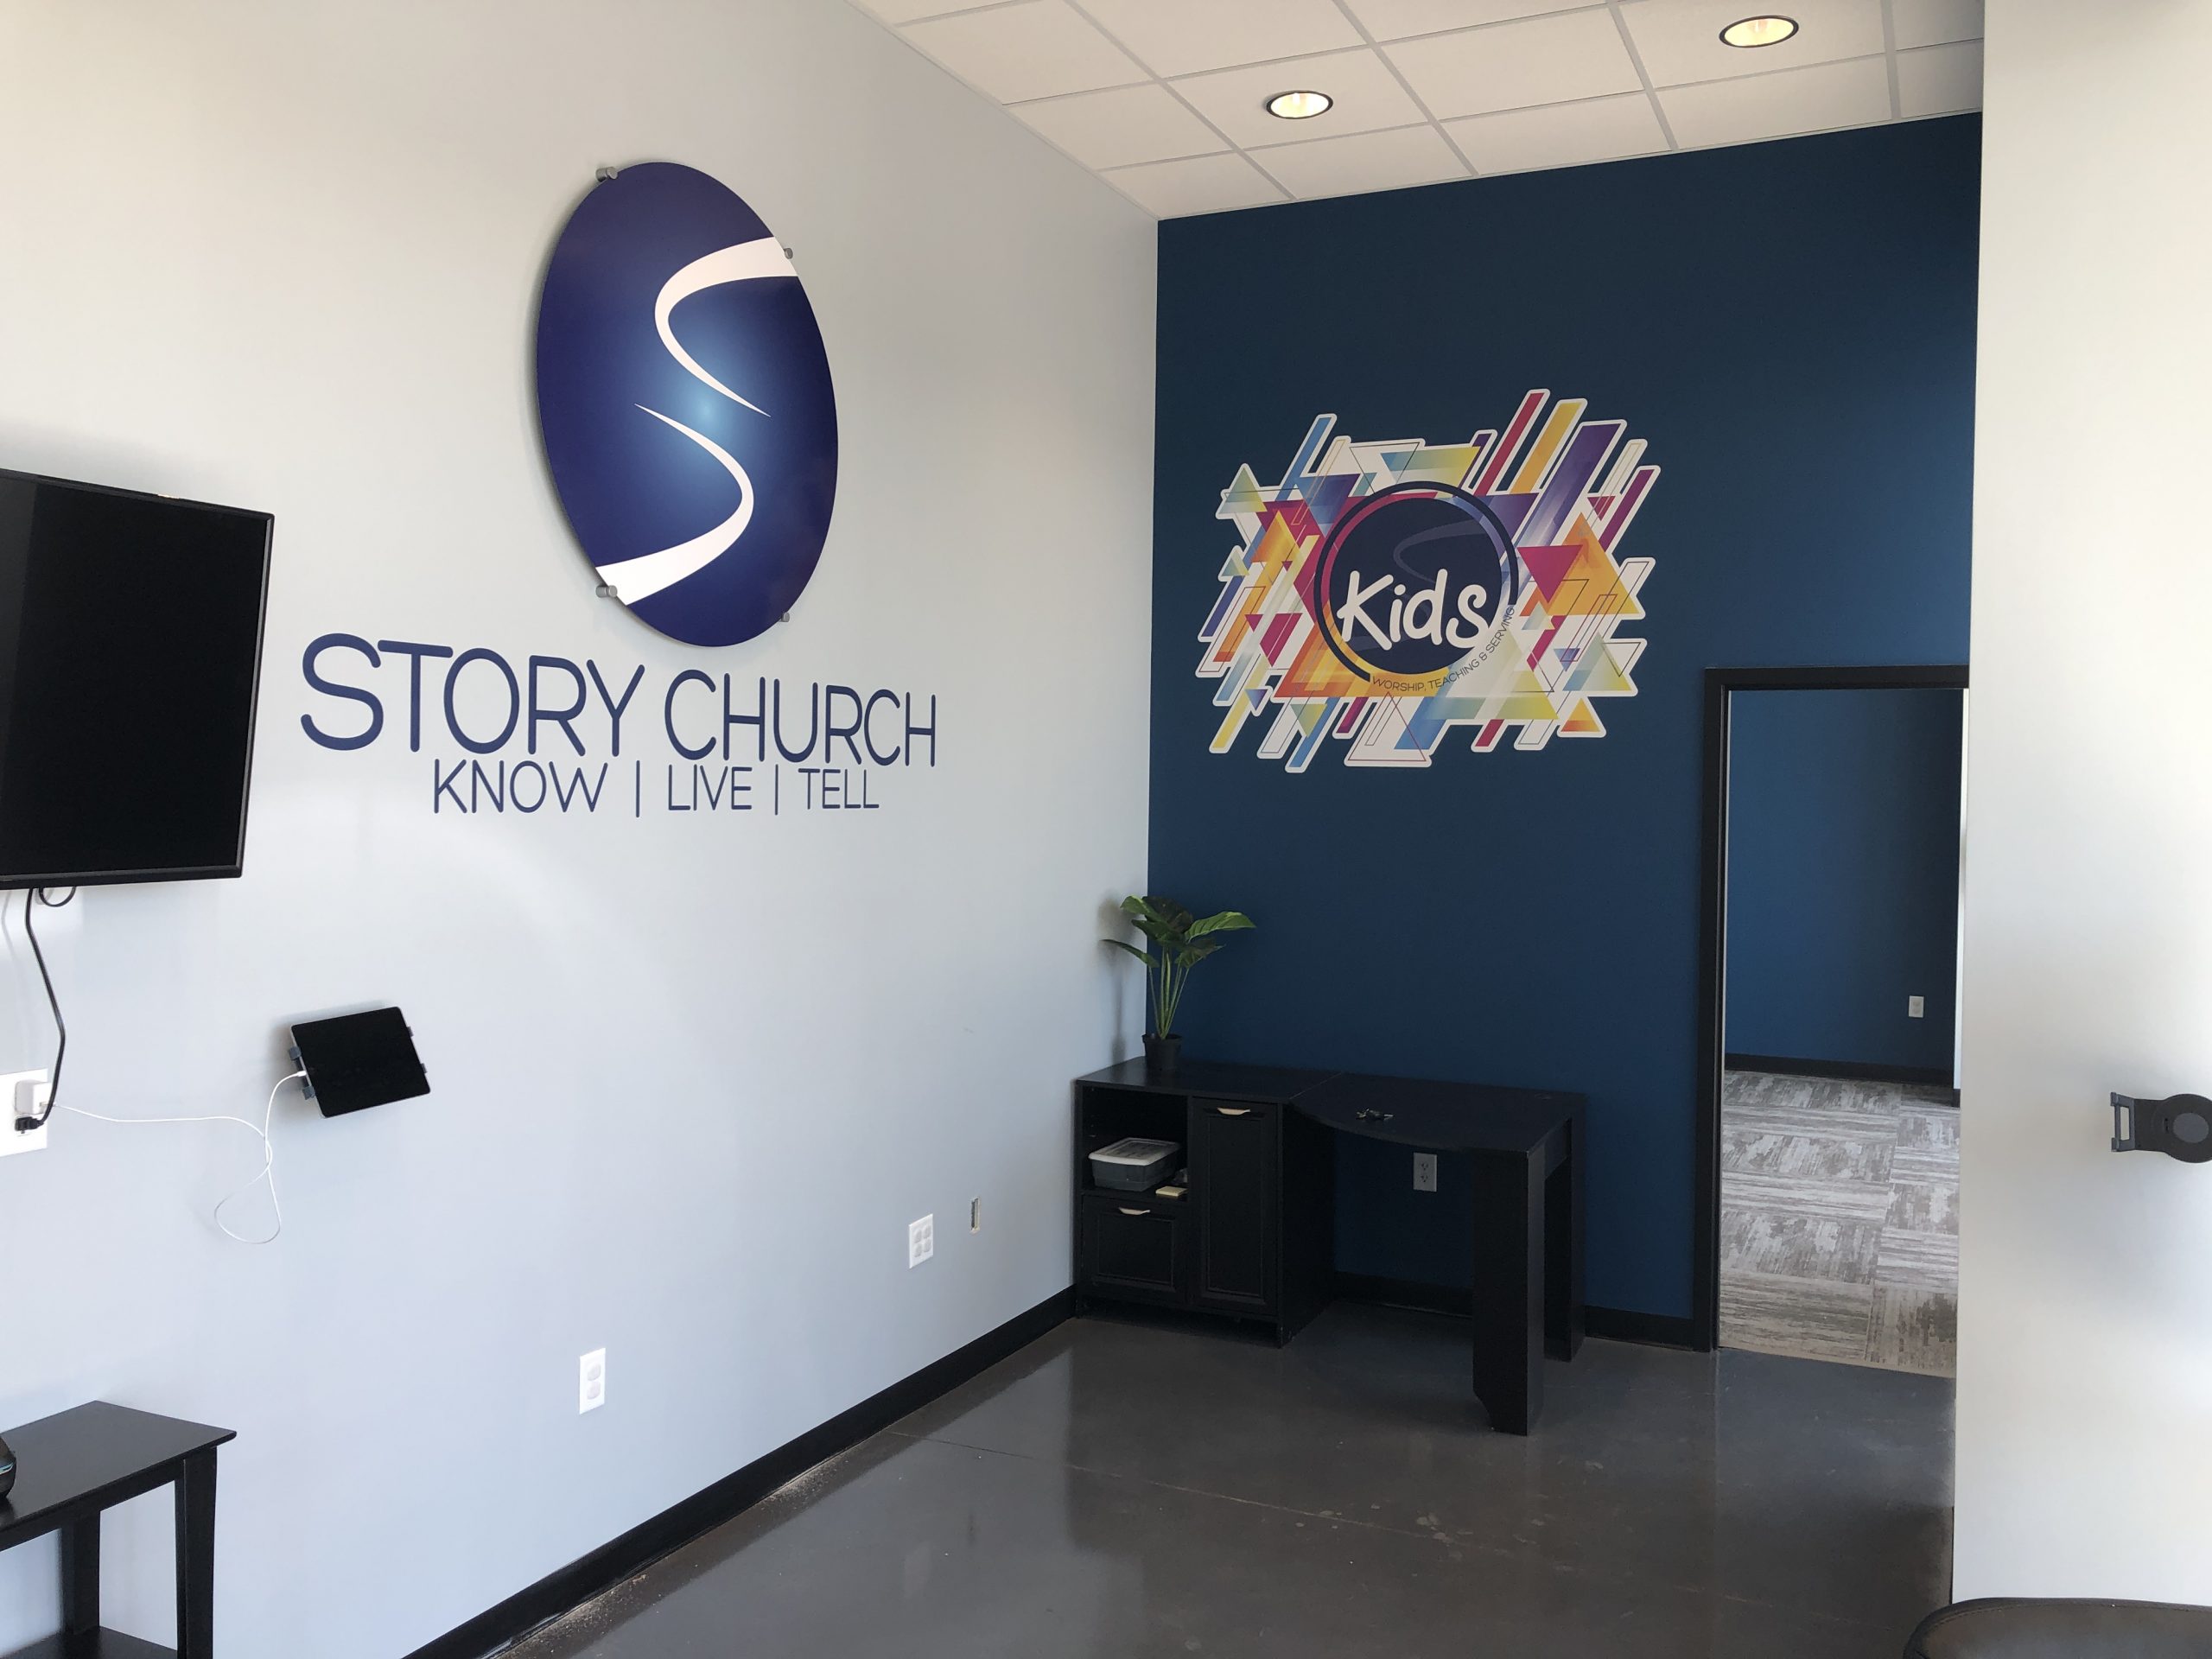 Story Church & Story Kids